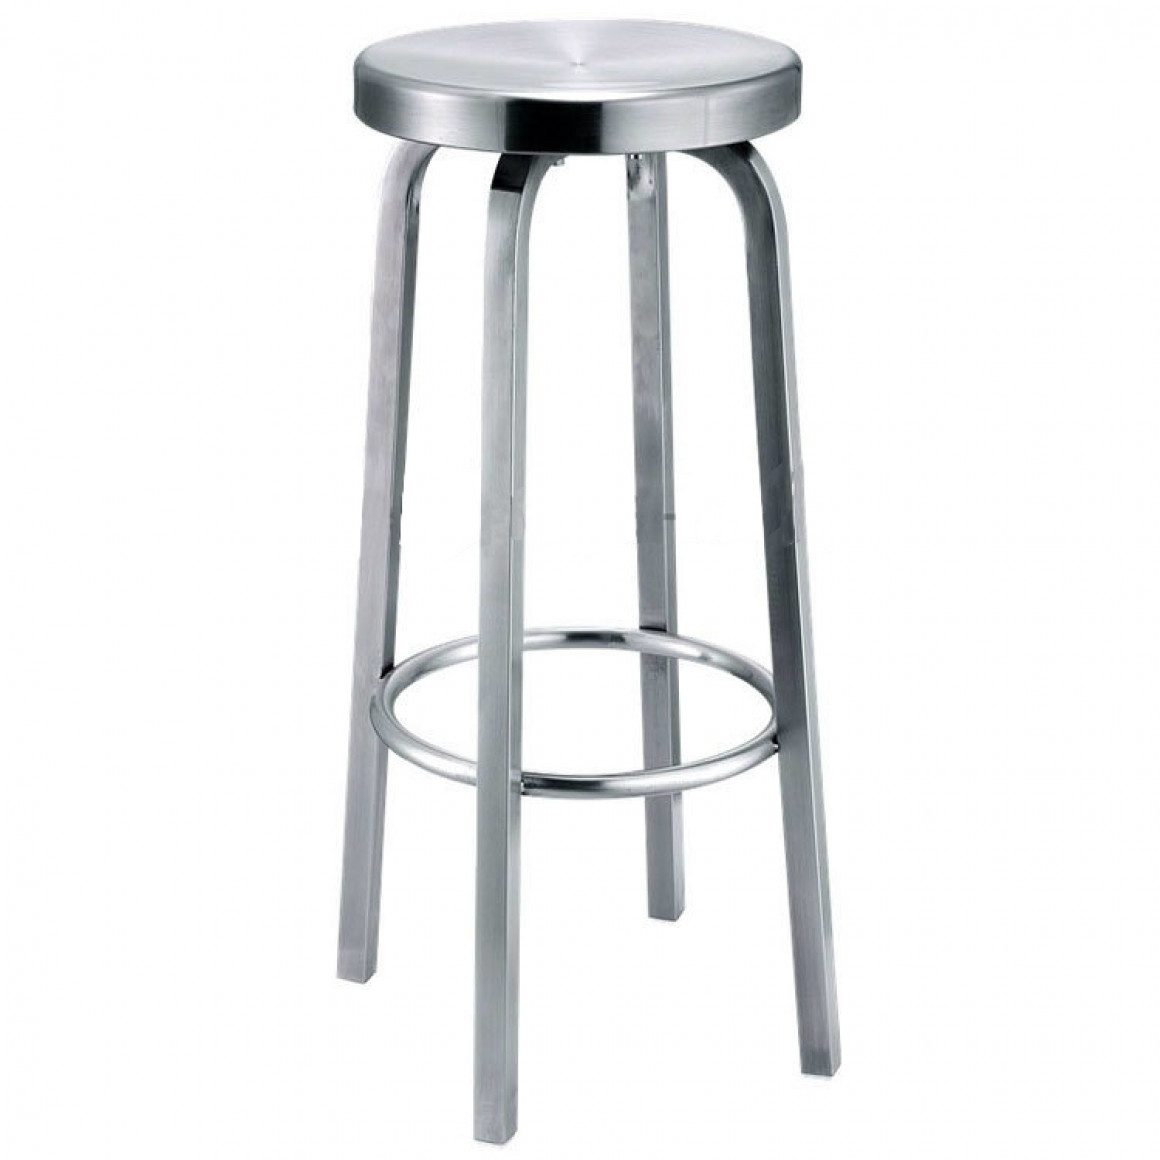 Bar stool, 201 stainless steel